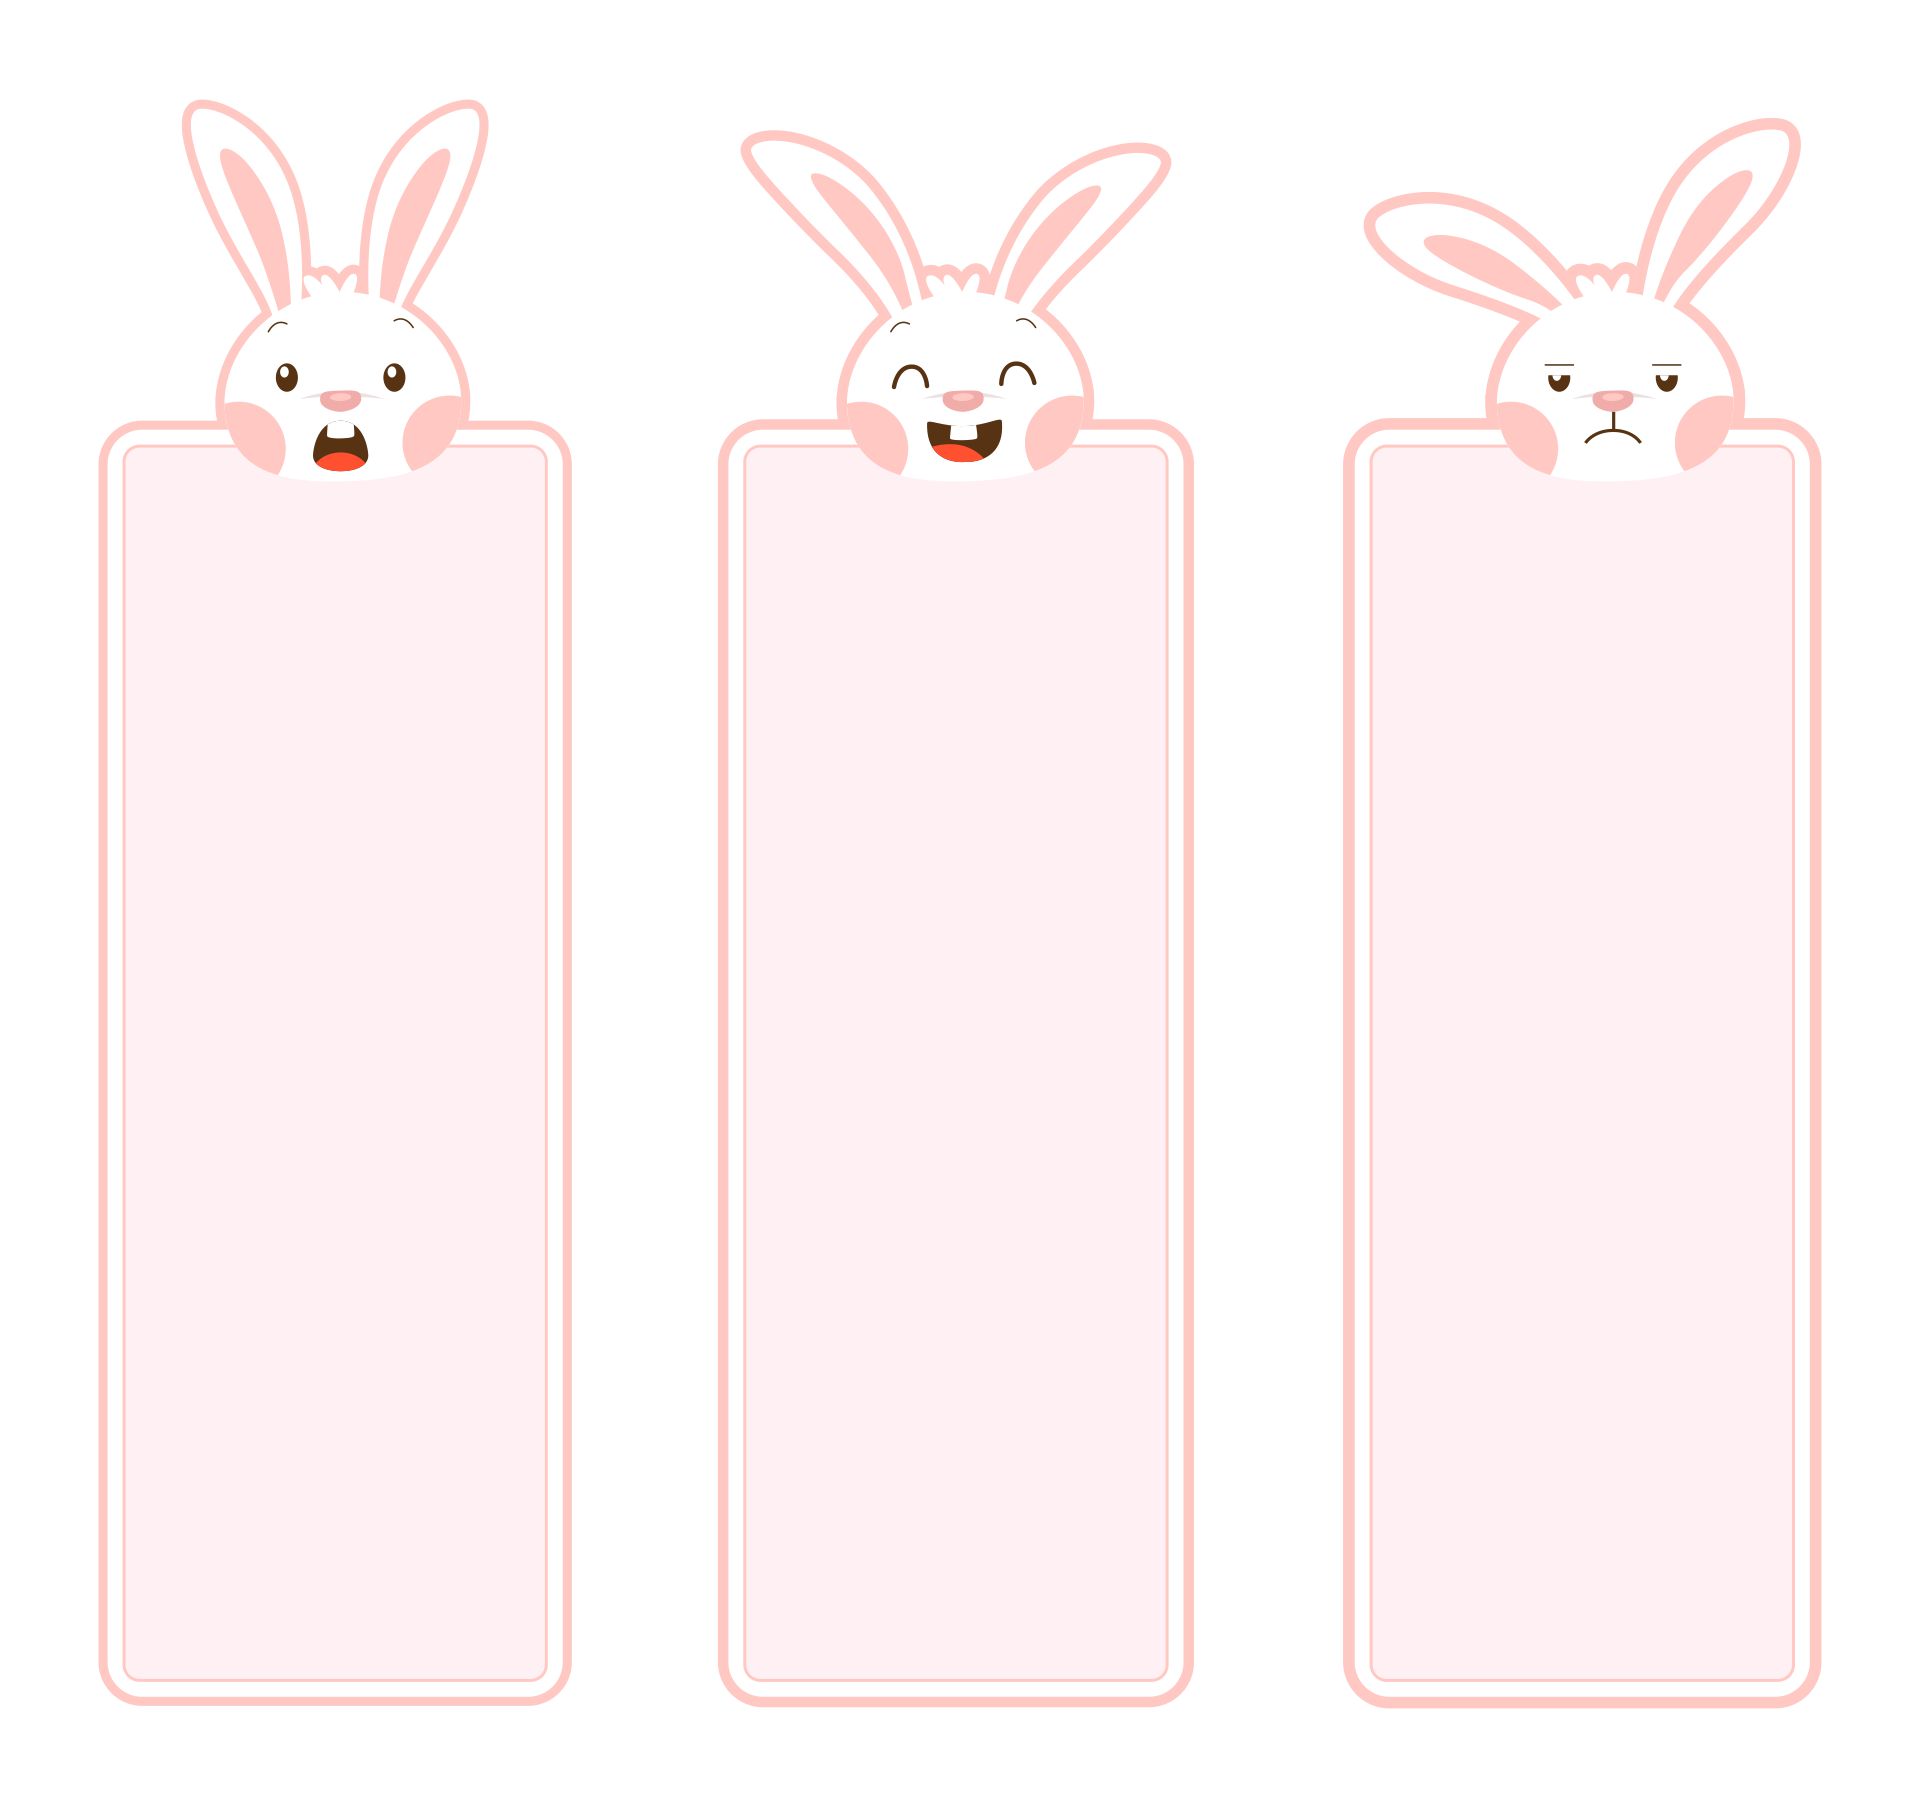 Printable Easter Bunny Bookmark